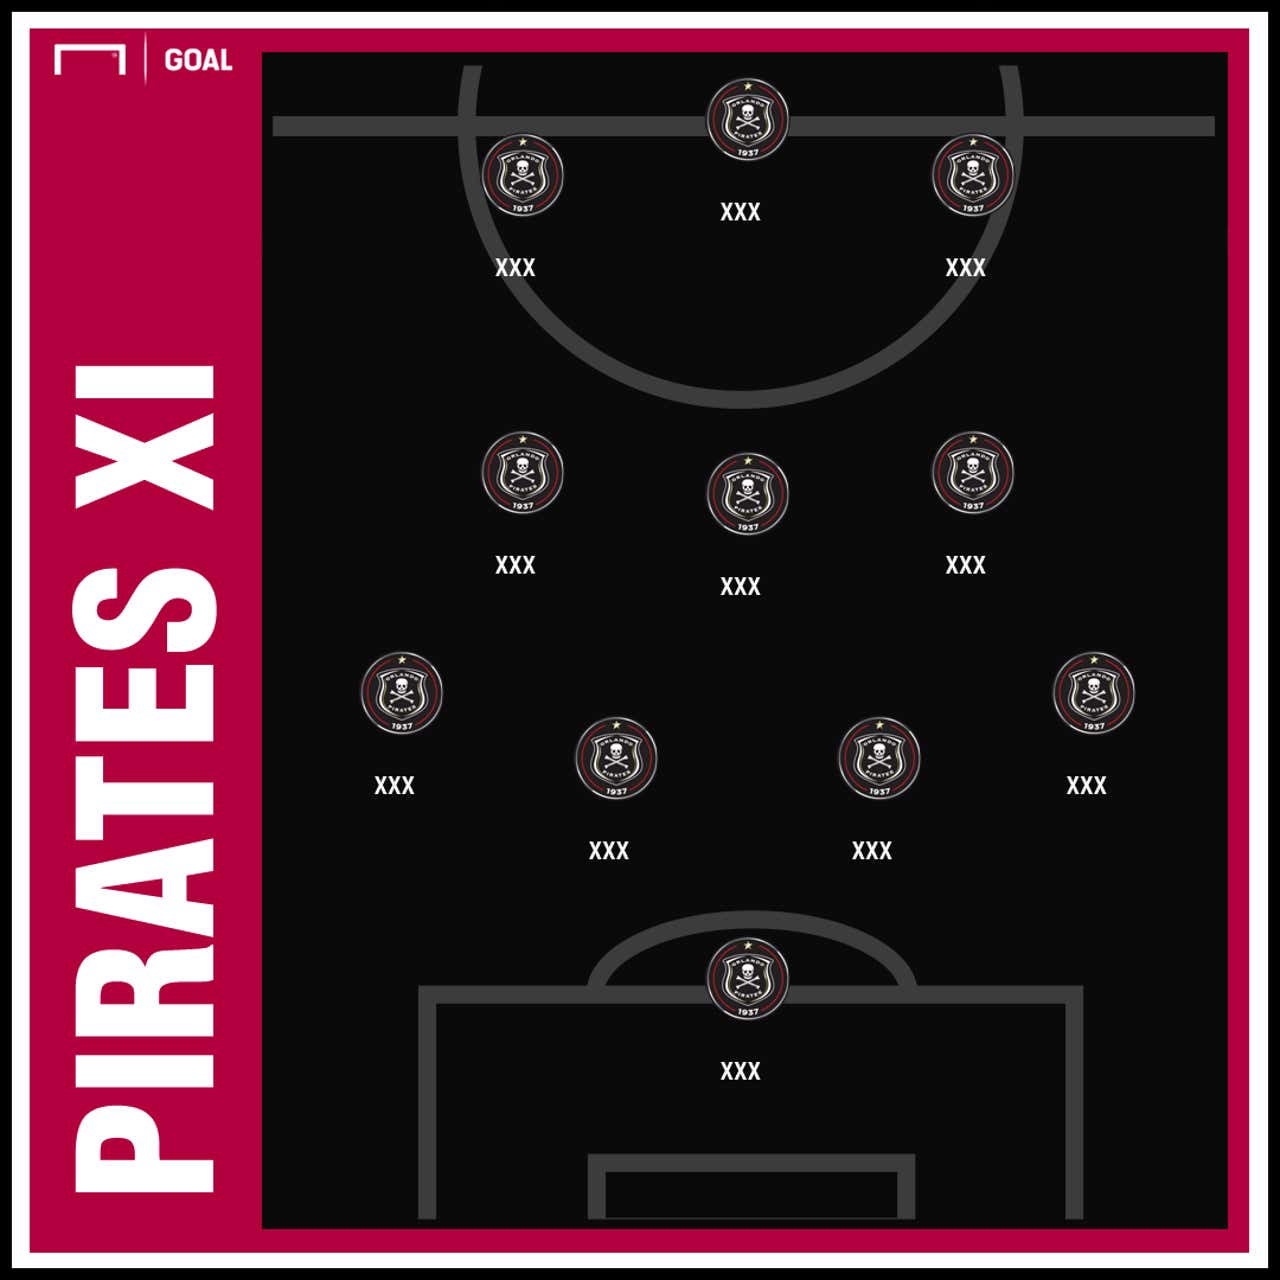 FIFA22: Picking a Kaizer Chiefs/Orlando Pirates combined XI